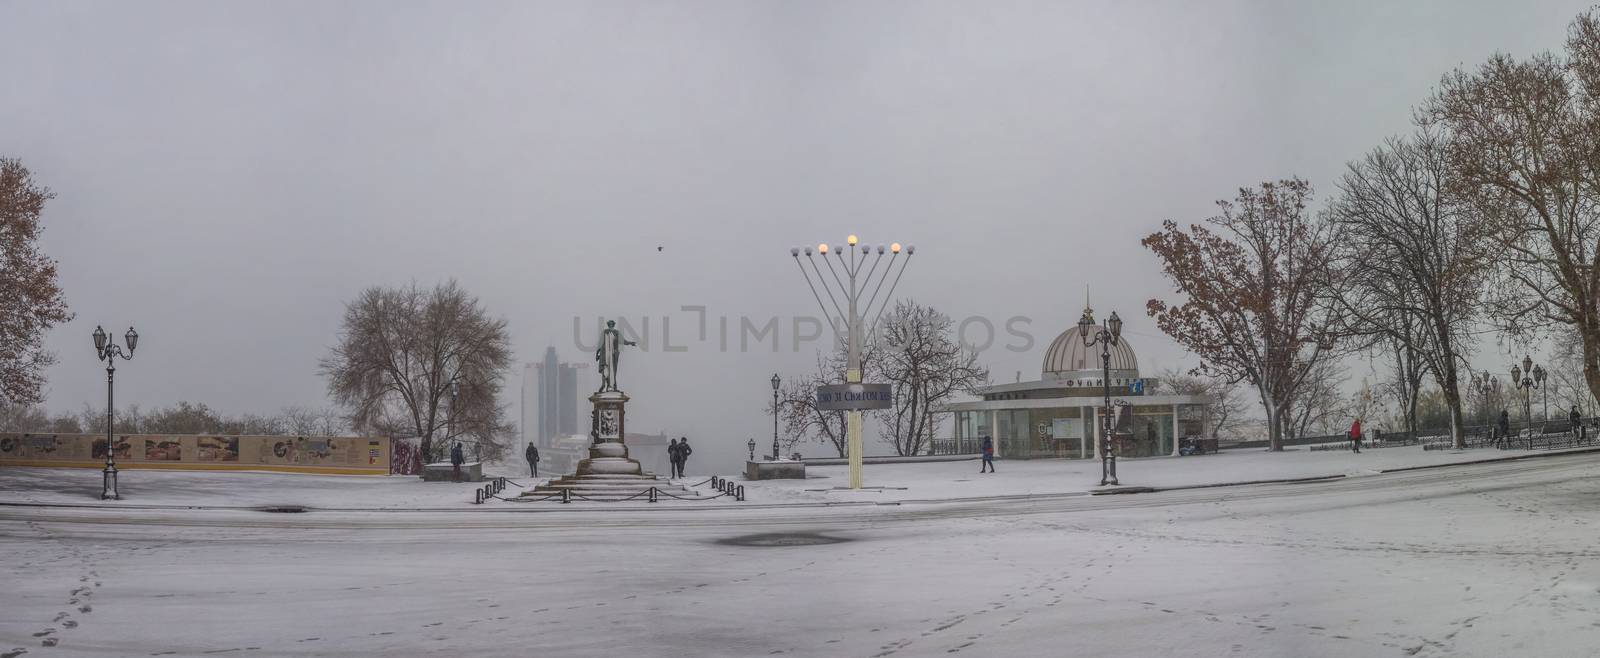 Snowy morning in Odessa, Ukraine by Multipedia